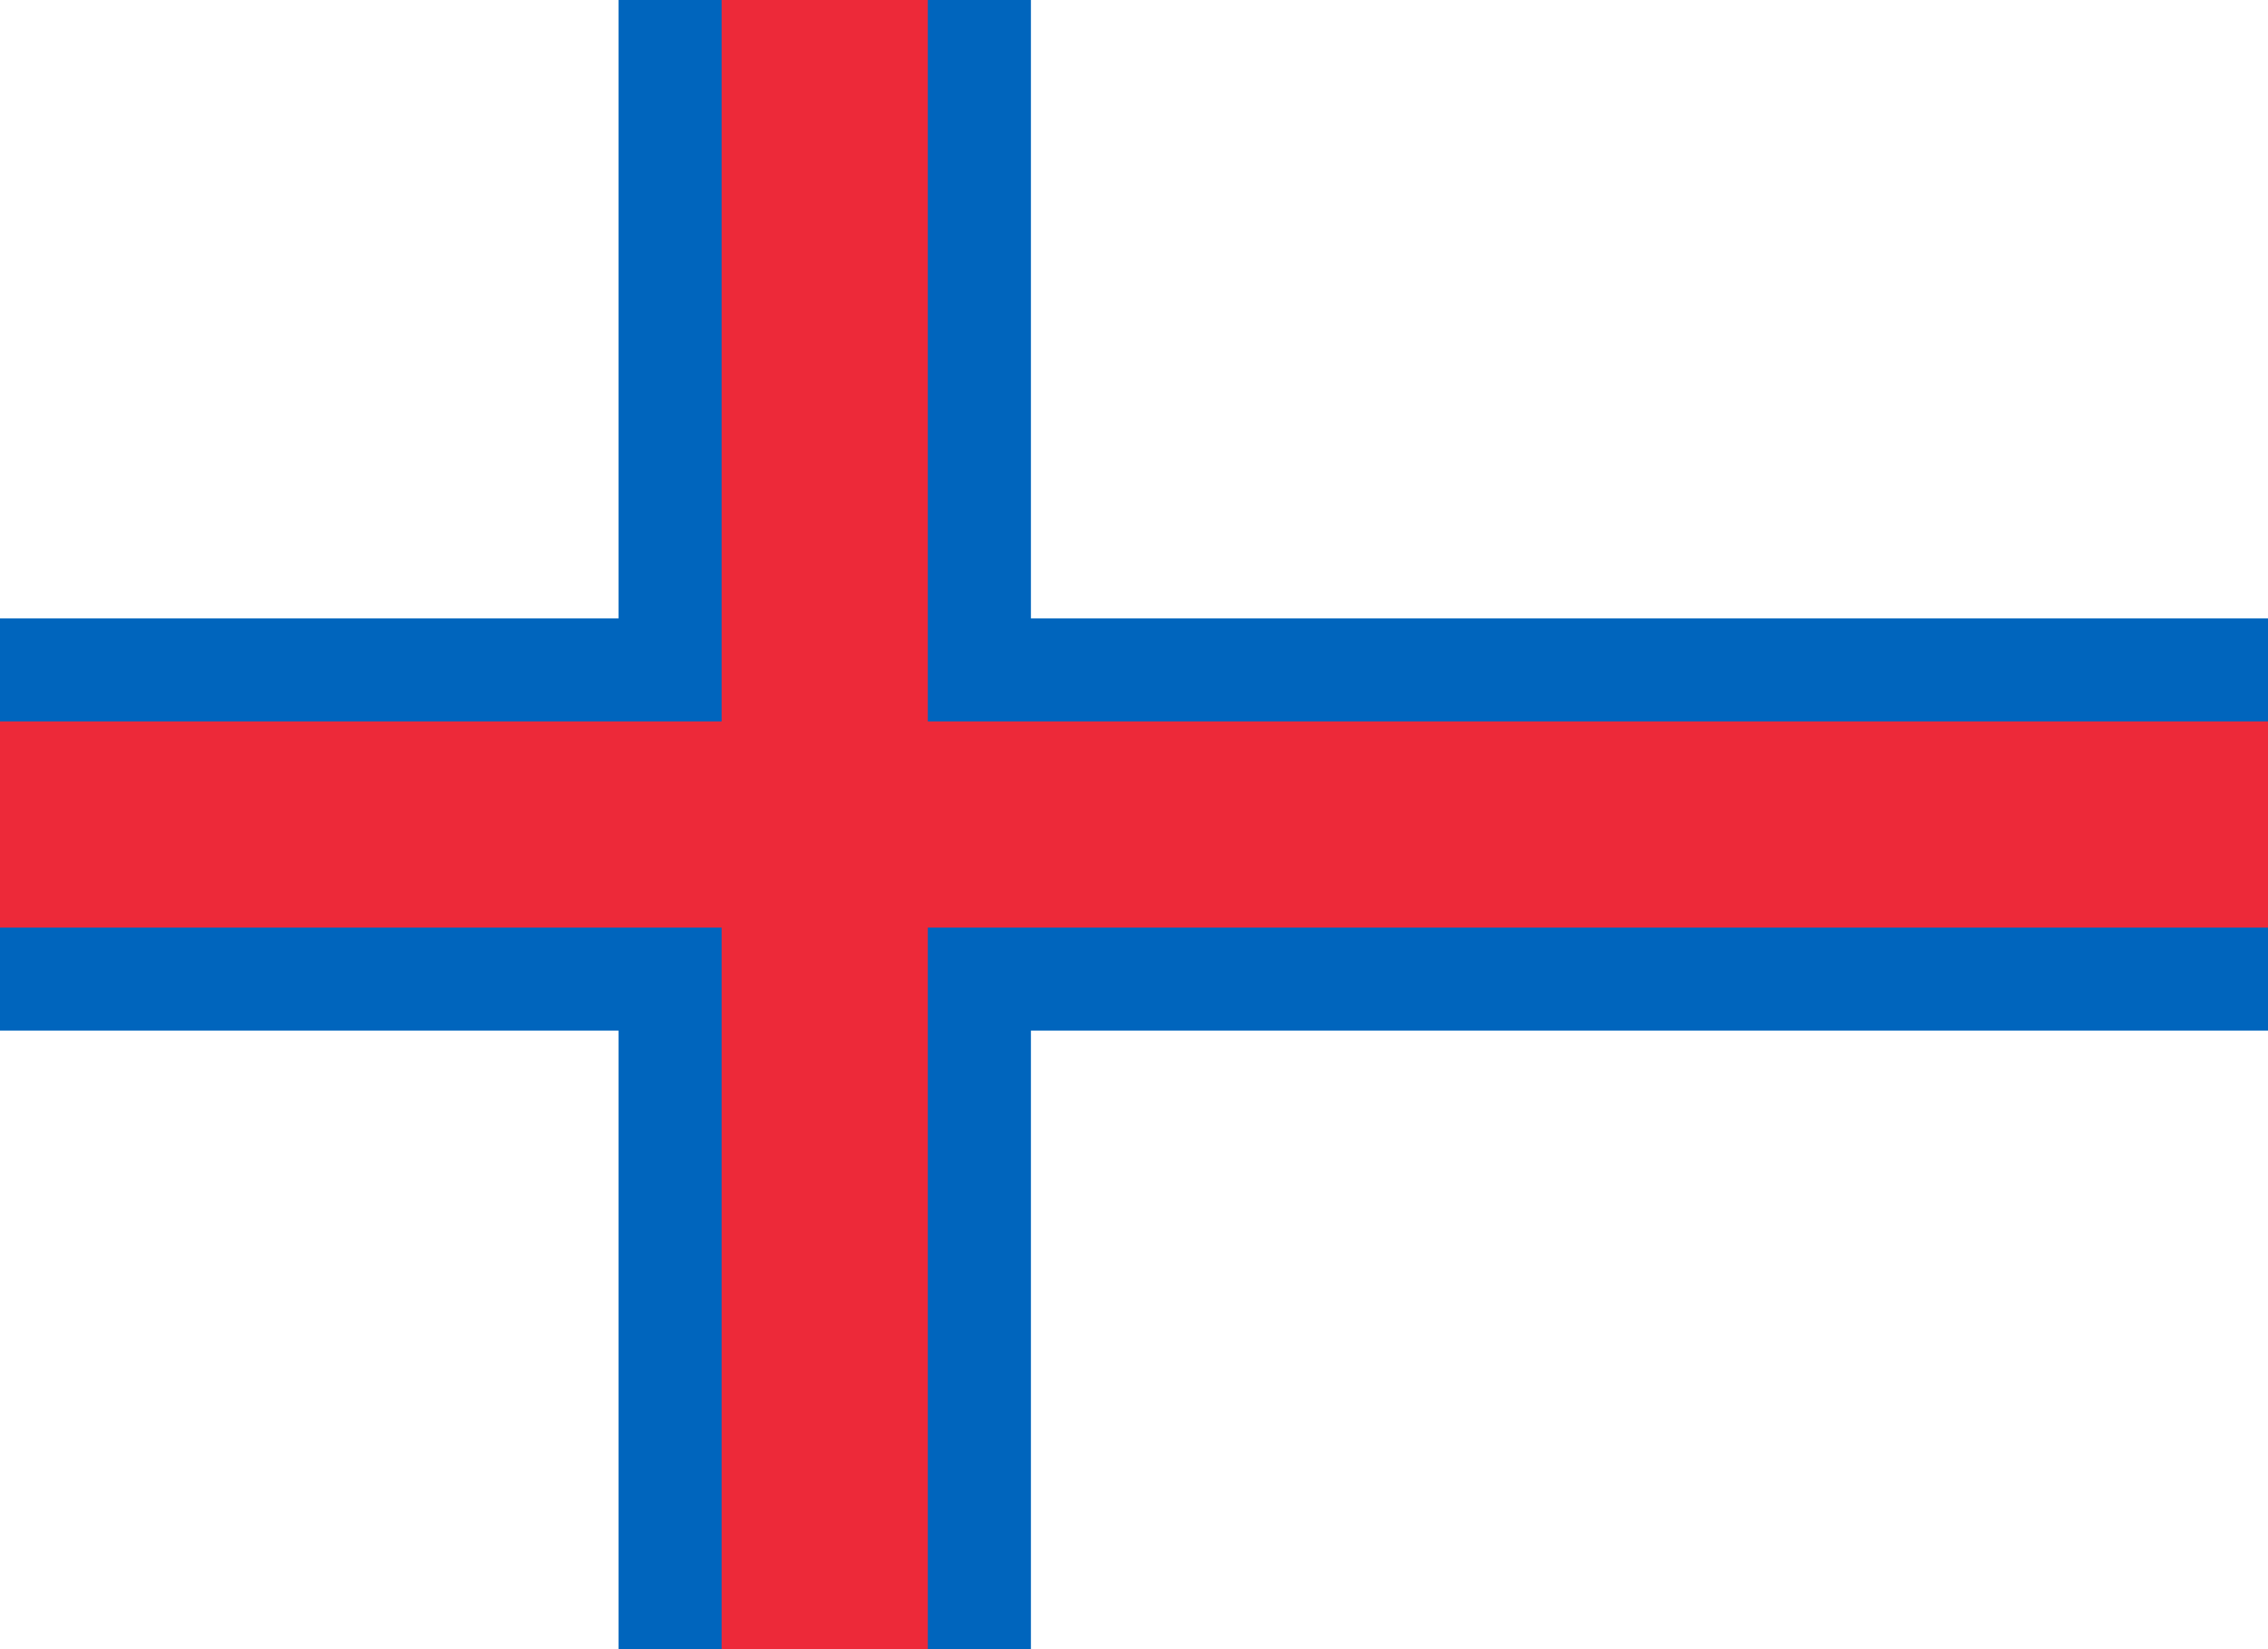 Free Faroe Islands Flag Documents: PDF, DOC, DOCX, HTML & More!